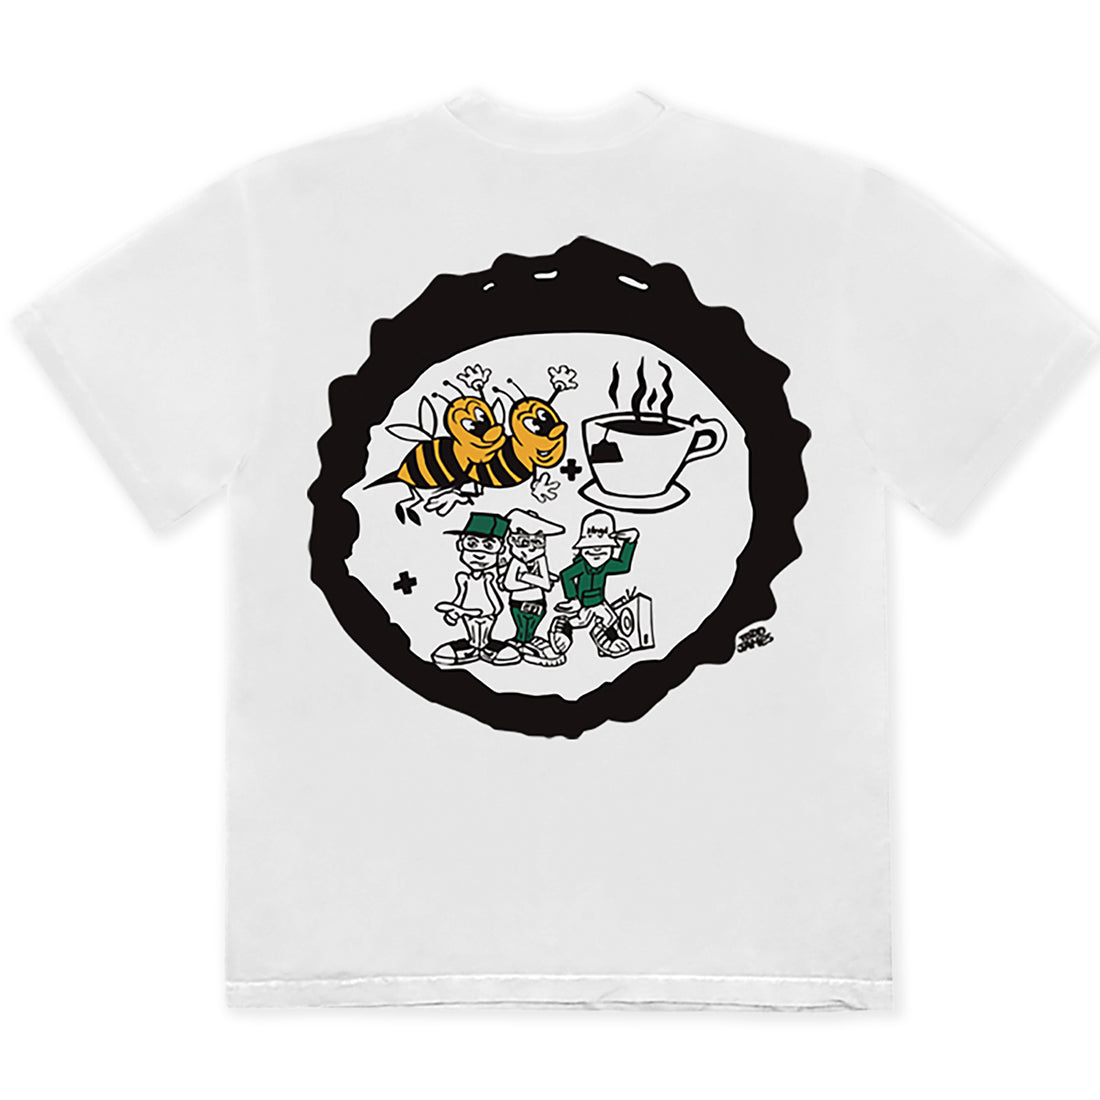 Beastie Boys Logo T-Shirt